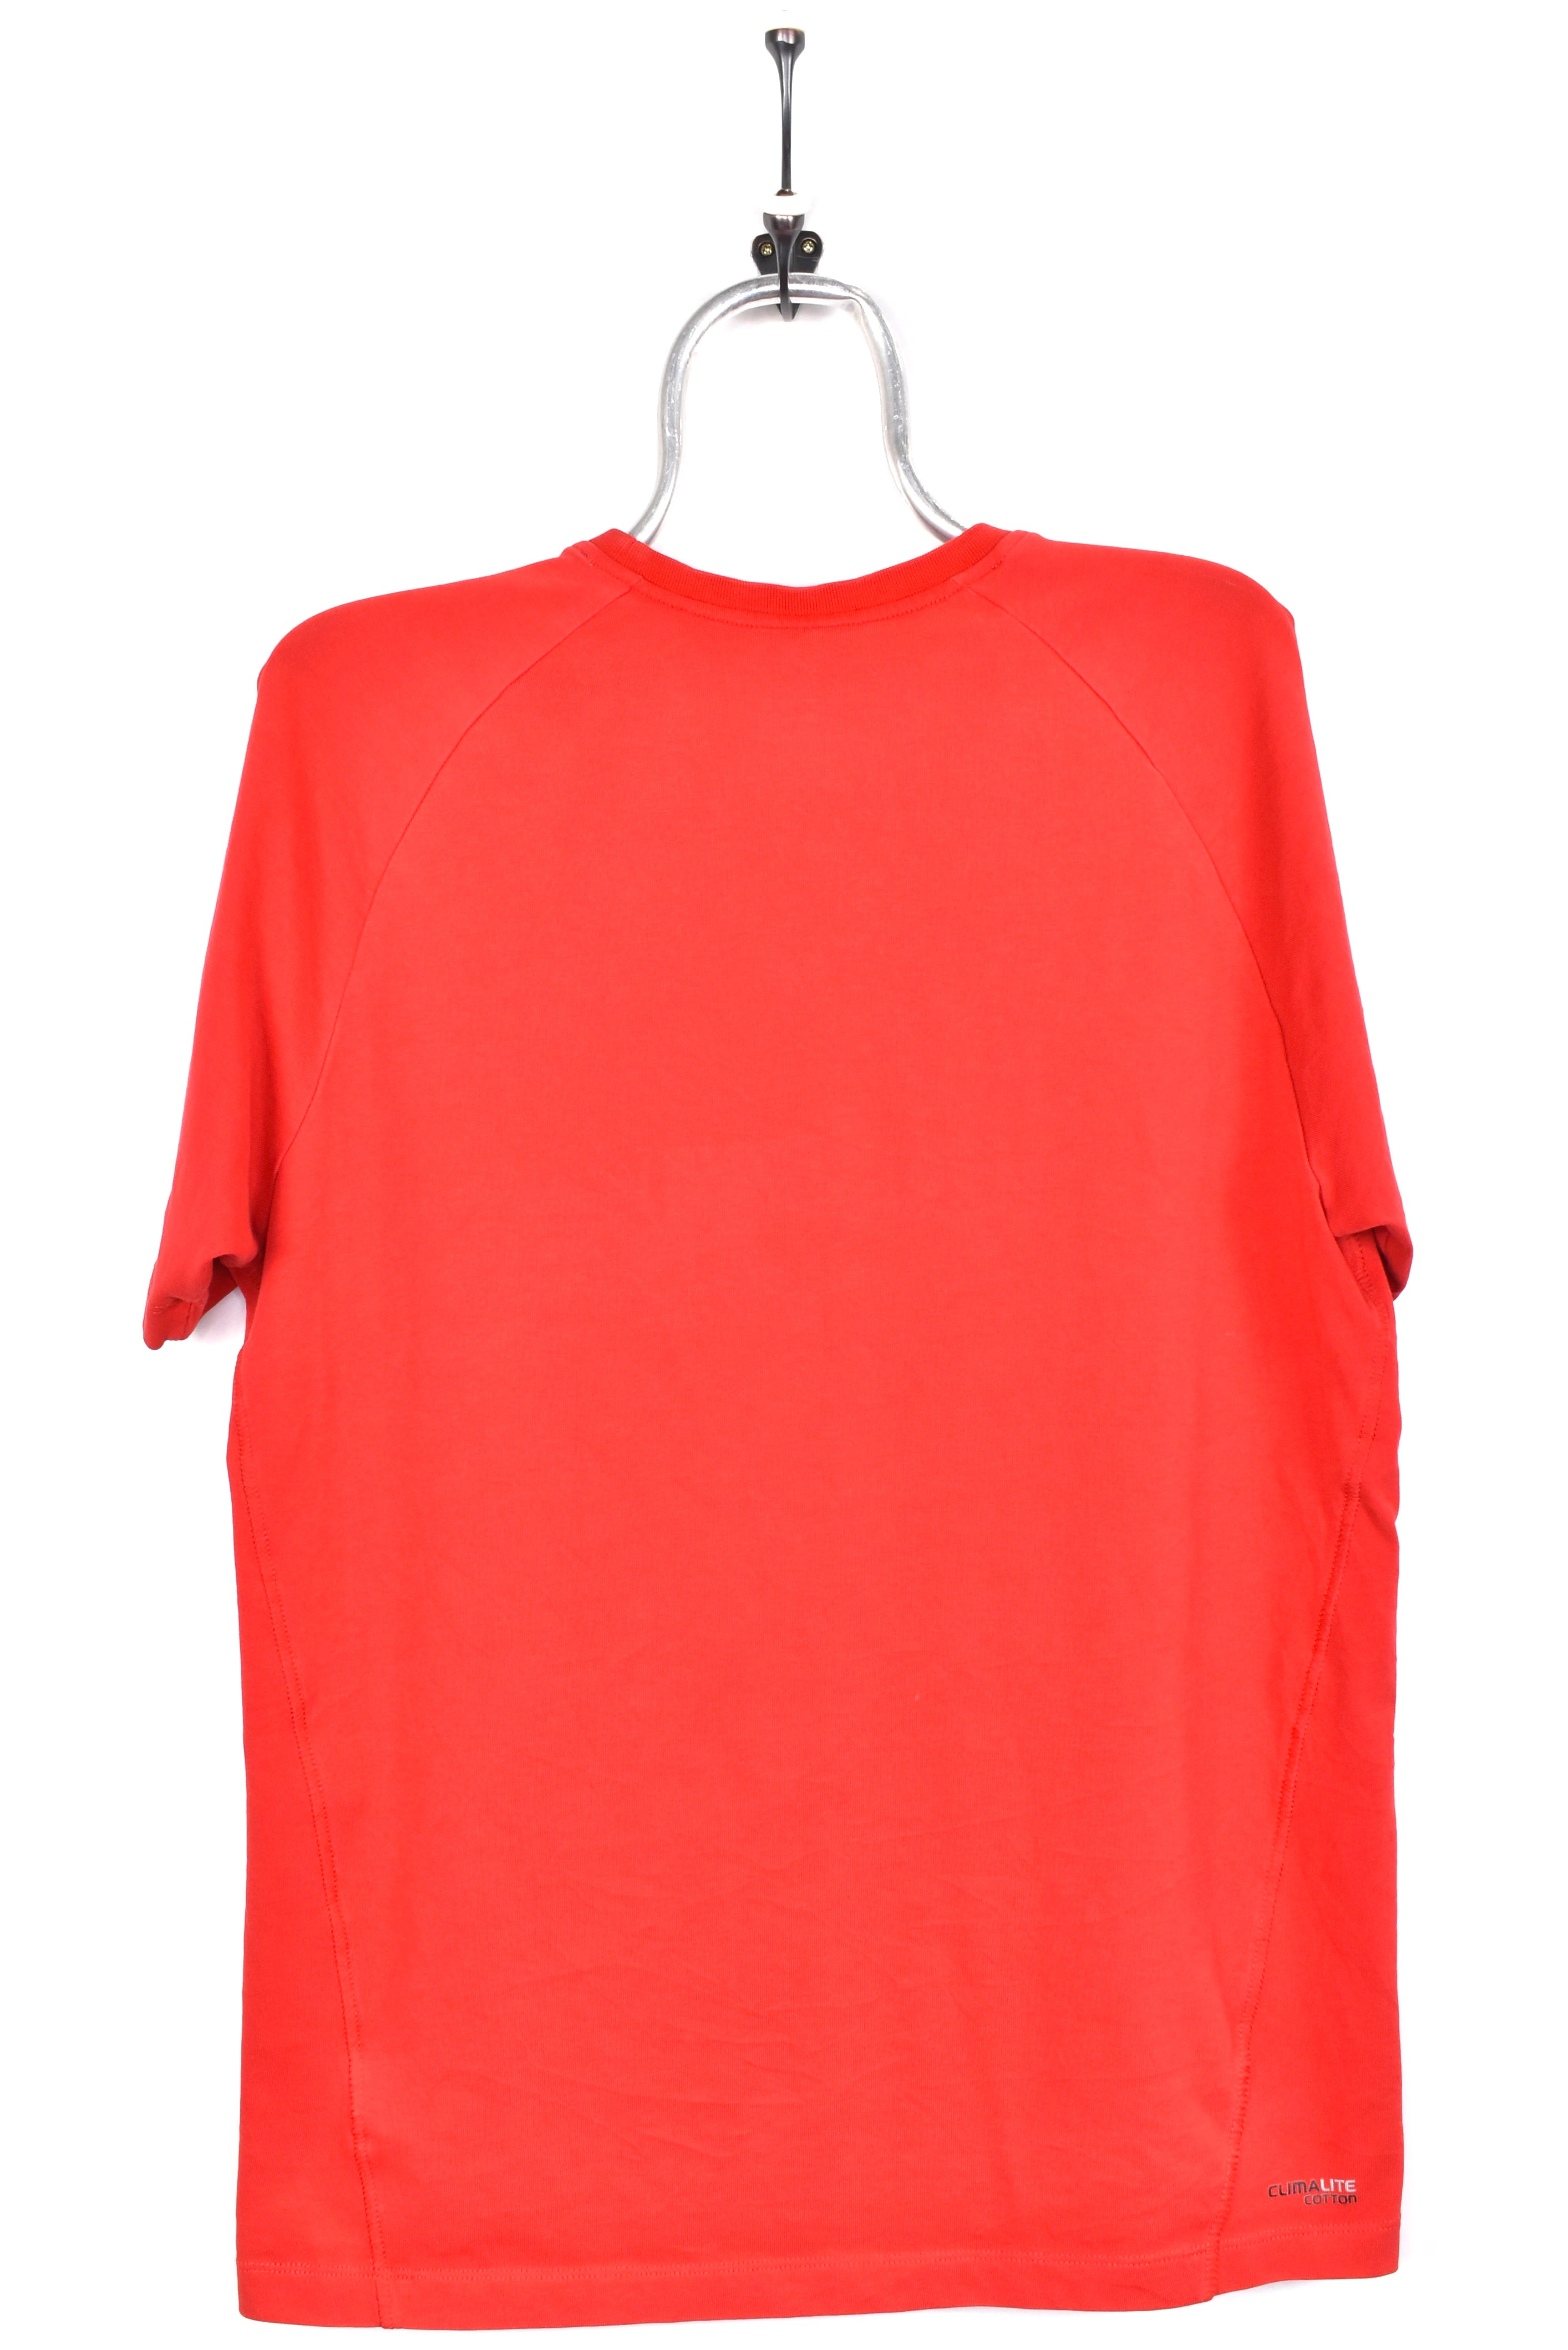 Vintage Adidas shirt, red embroidered tee - AU L ADIDAS